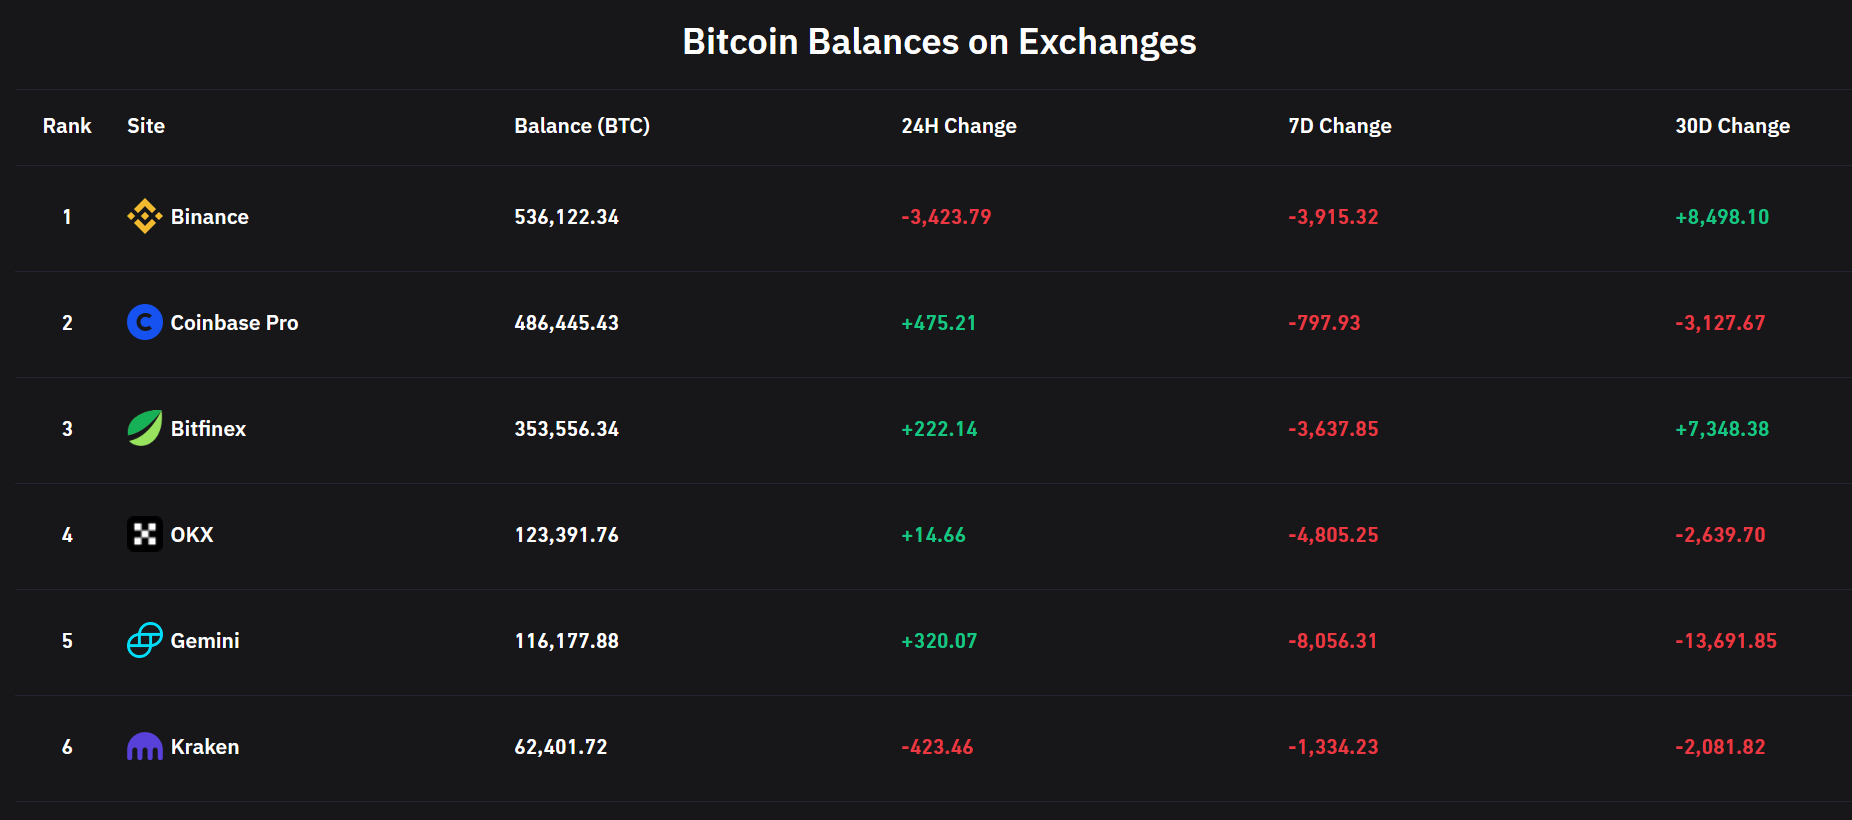 Overview of Bitcoin Balances on Major